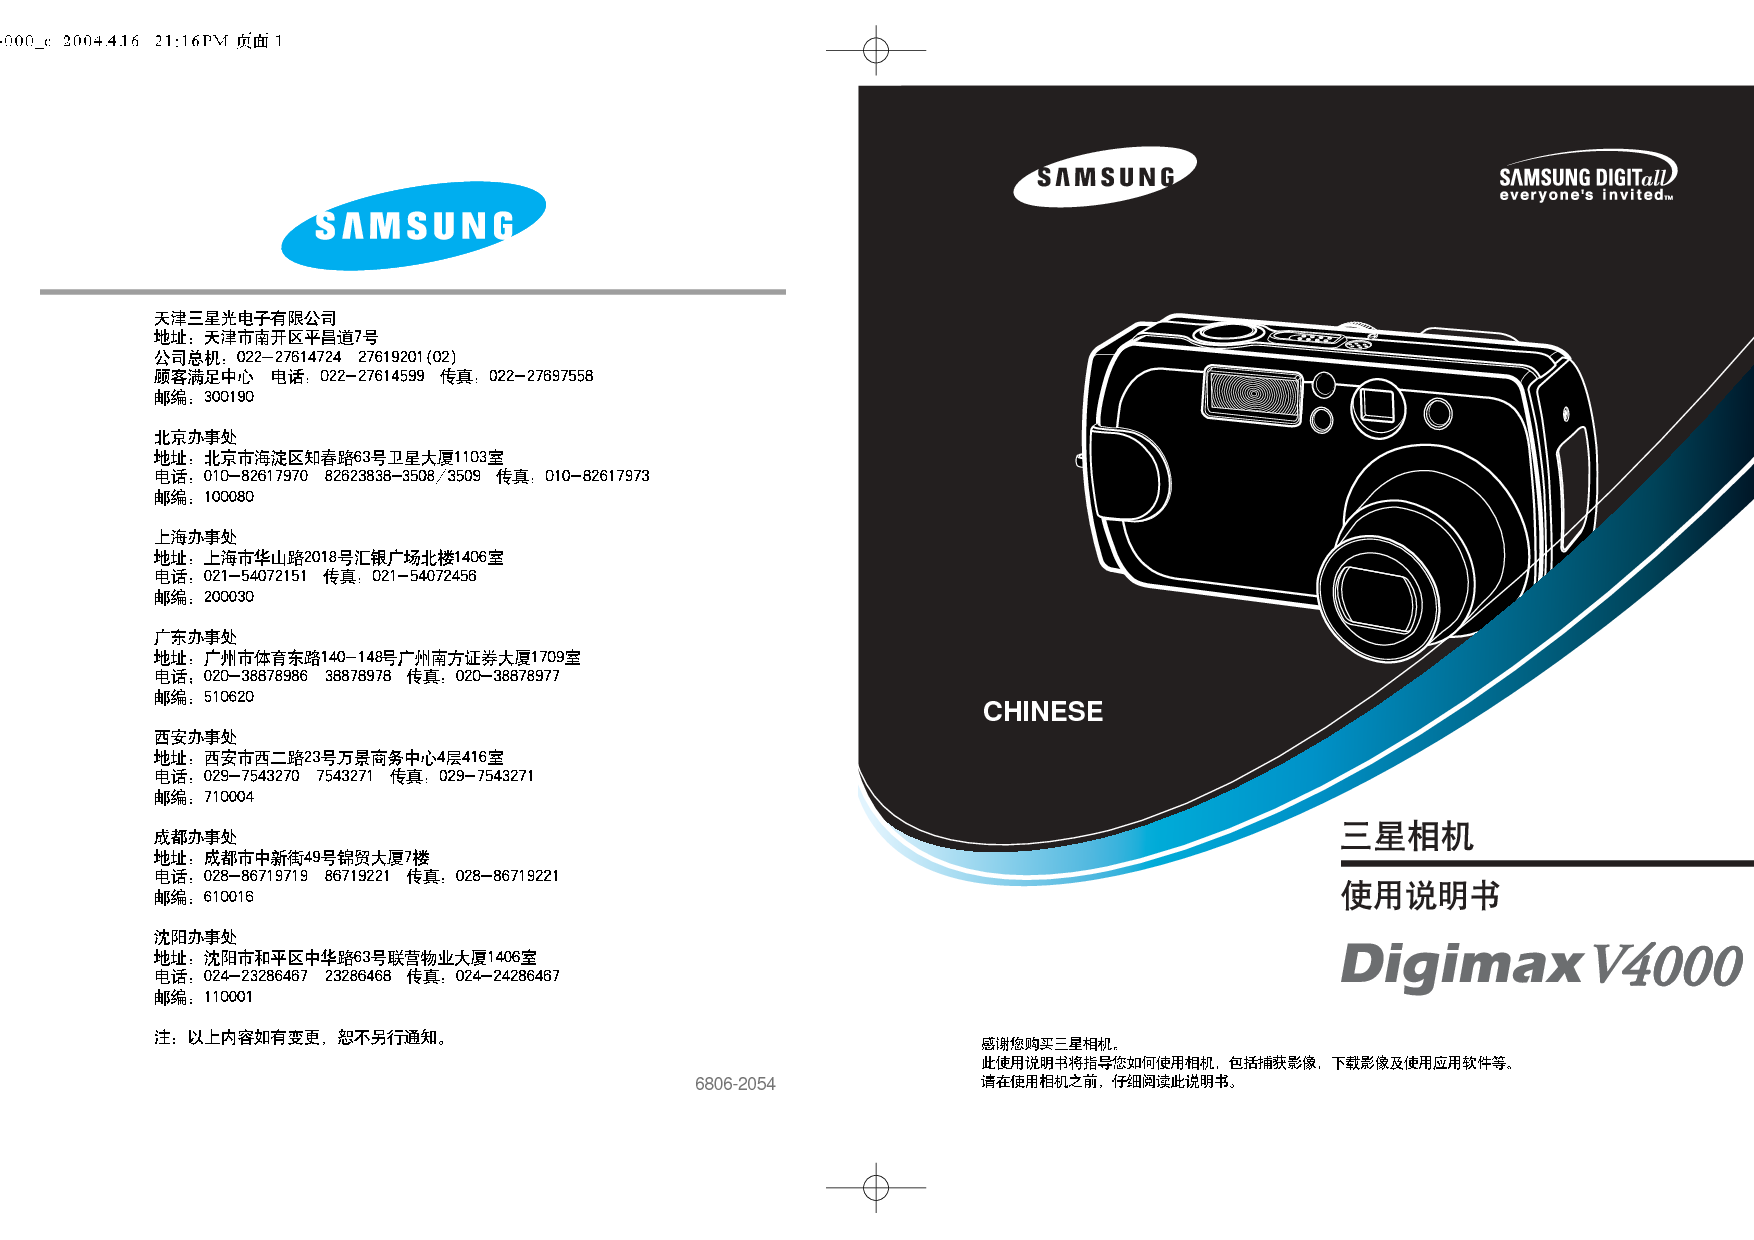 三星 Samsung Digimax V4000 用户手册 封面